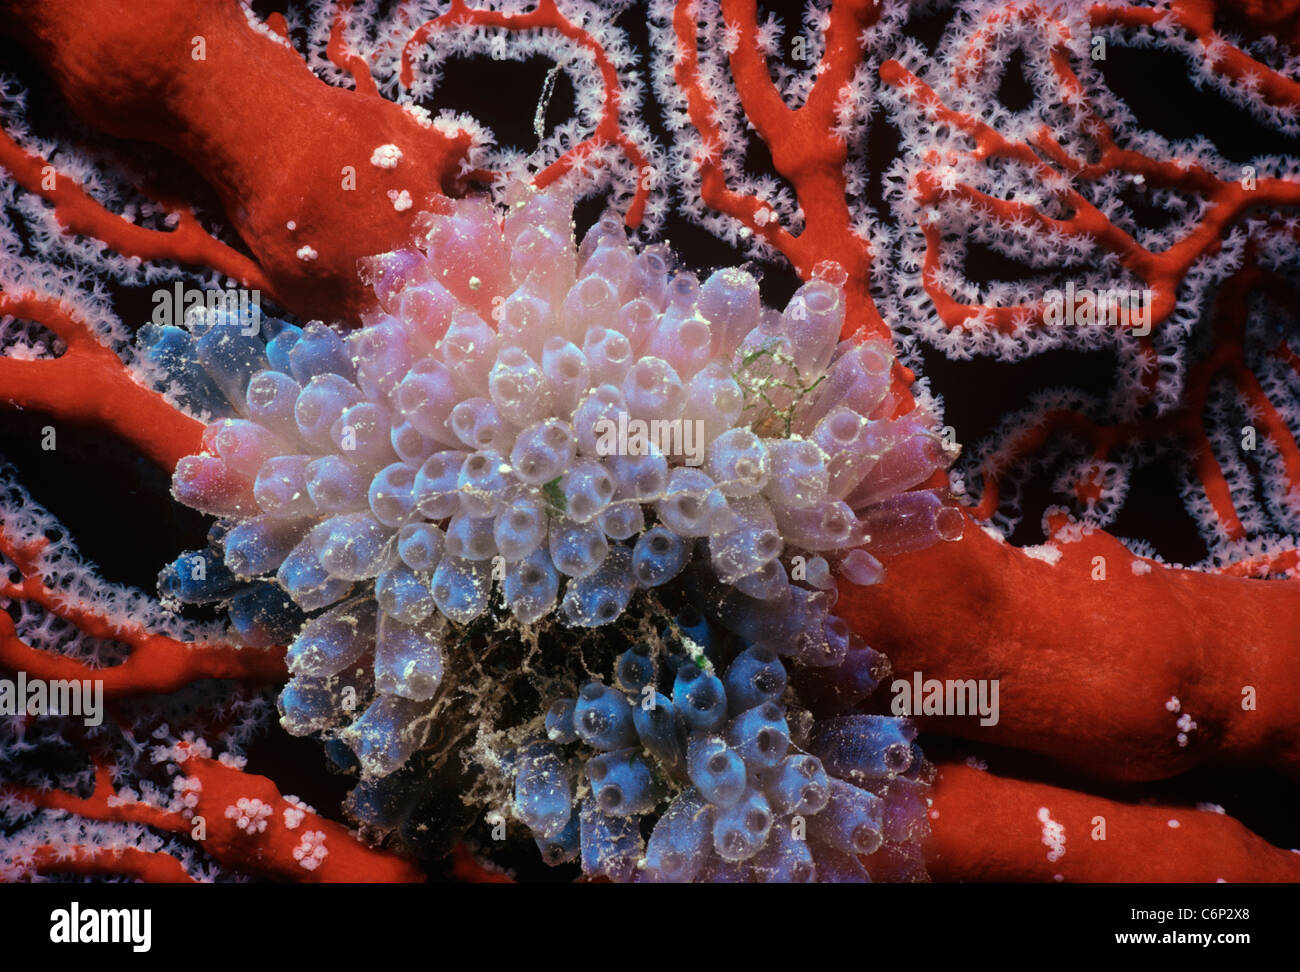 Colonial Tunicates (Clavelina sp.) growing on Gorgonian Coral (Gorgonacea). Palau Islands, Micronesia - Pacific Ocean Stock Photo